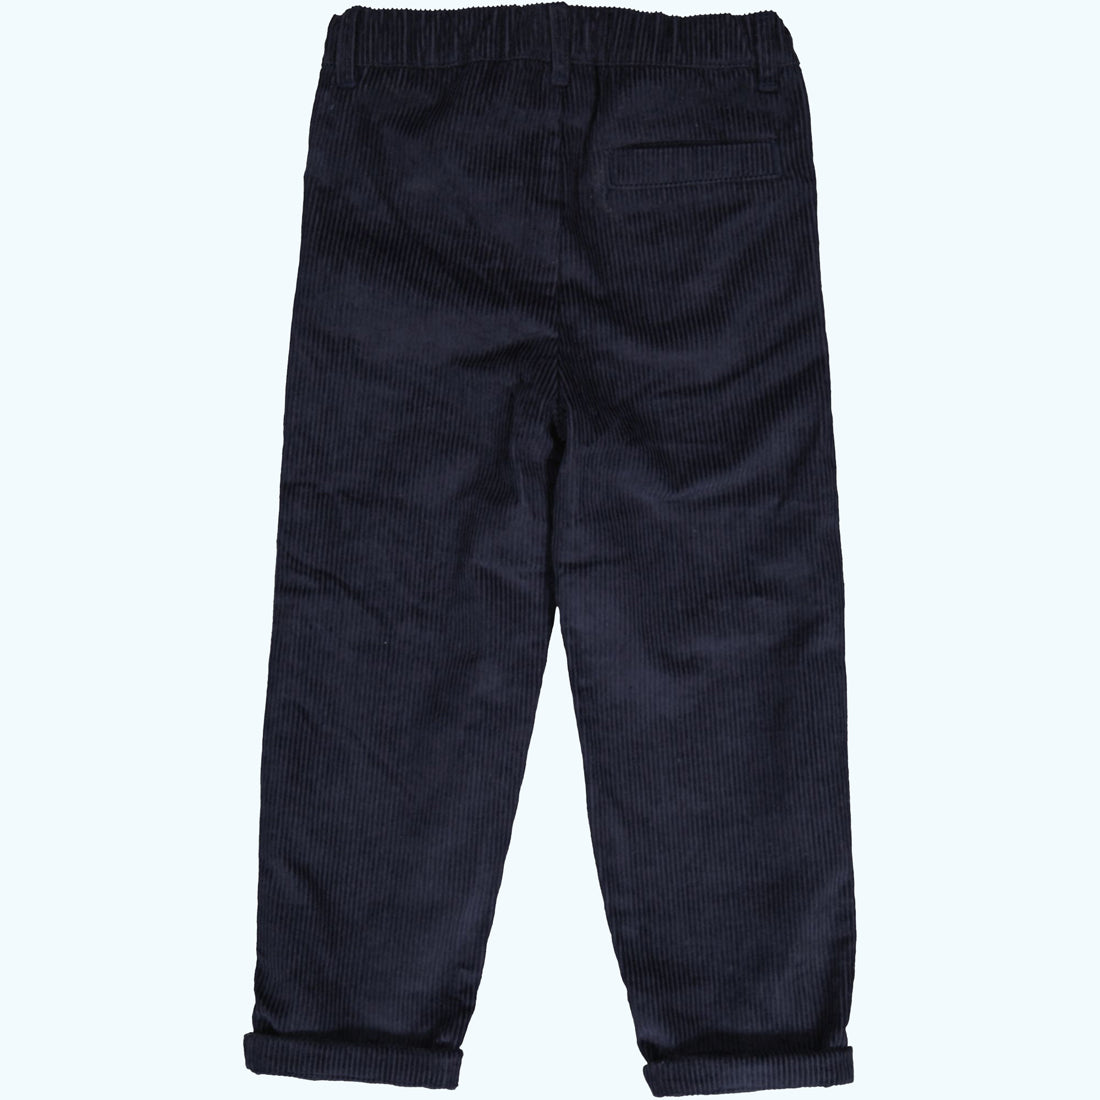 Geggamoja® Corduroy Pants for ages 1-6 yr. - NAVY BLUE